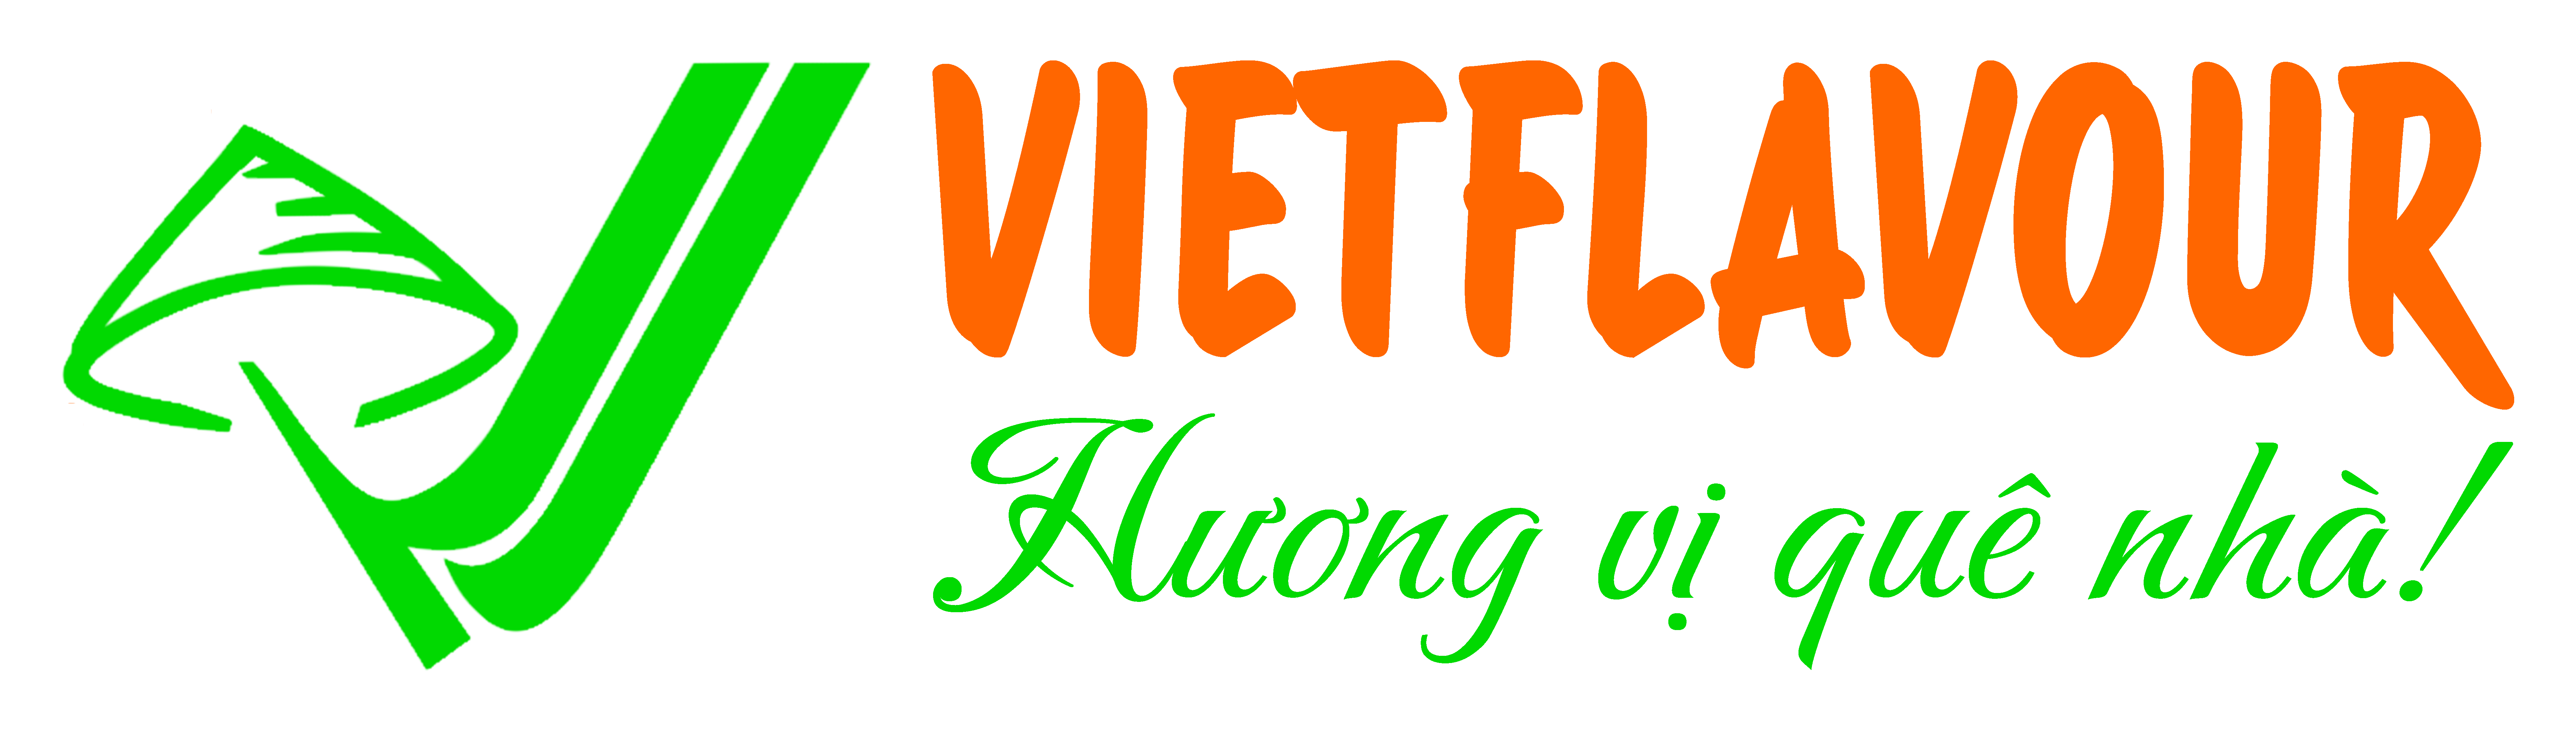 Logo Vietflavour.com theo chiều ngang